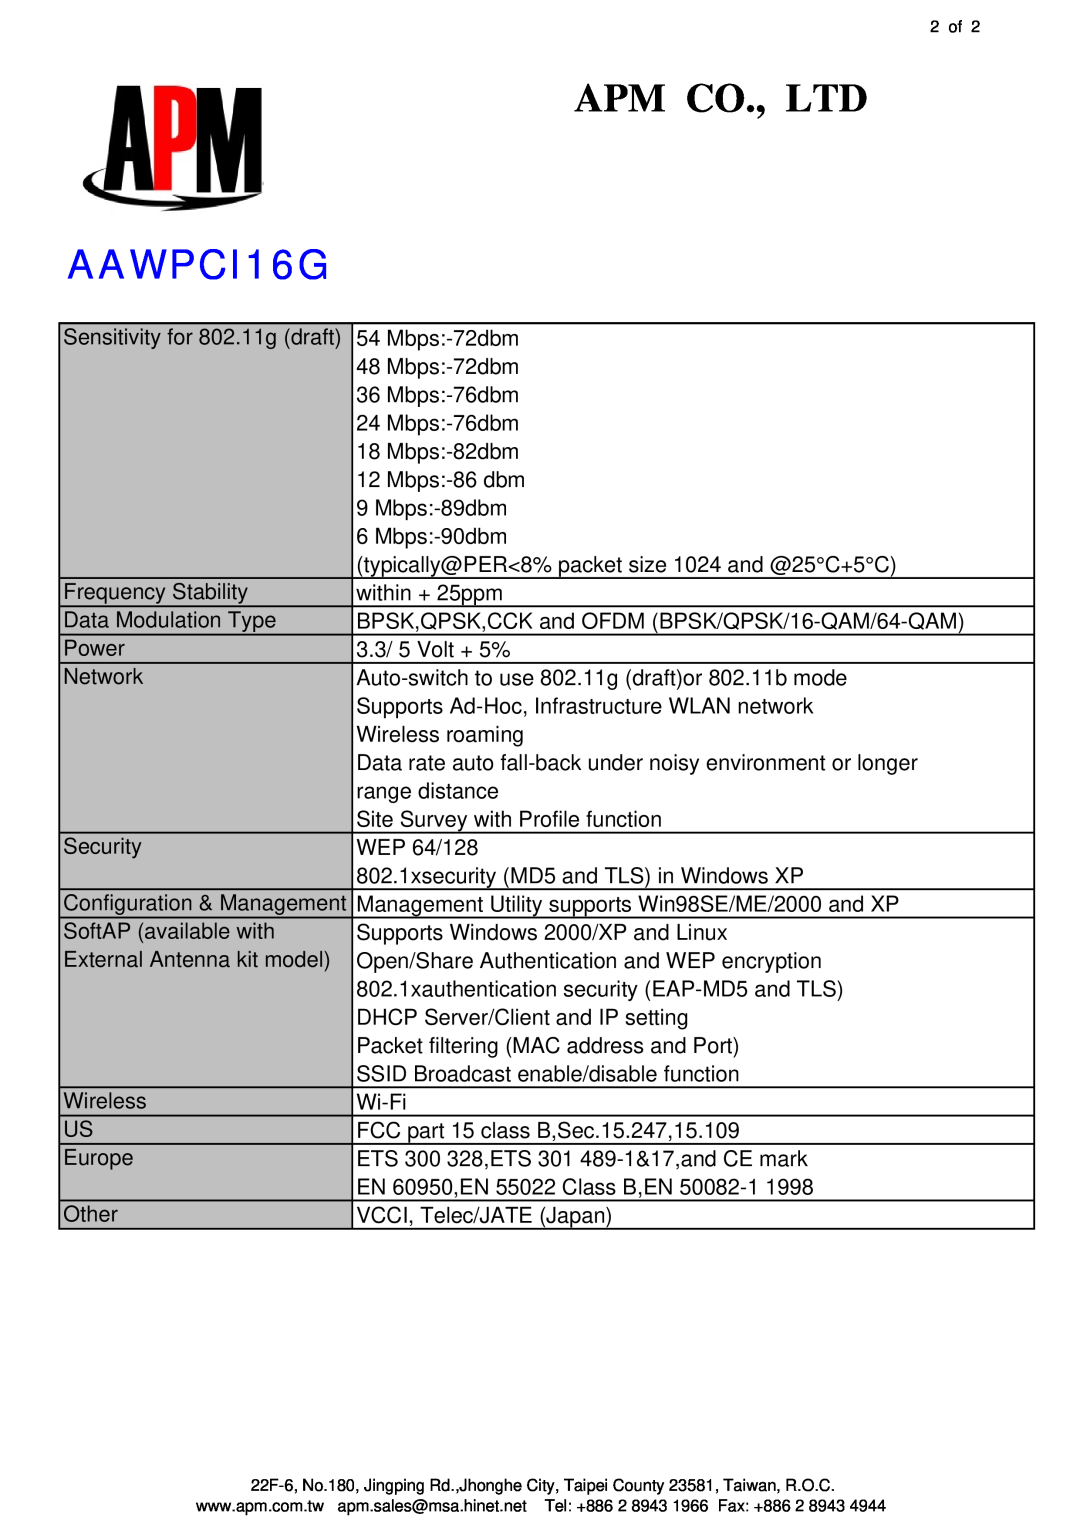 APM AAWPCI16G manual 2 of 